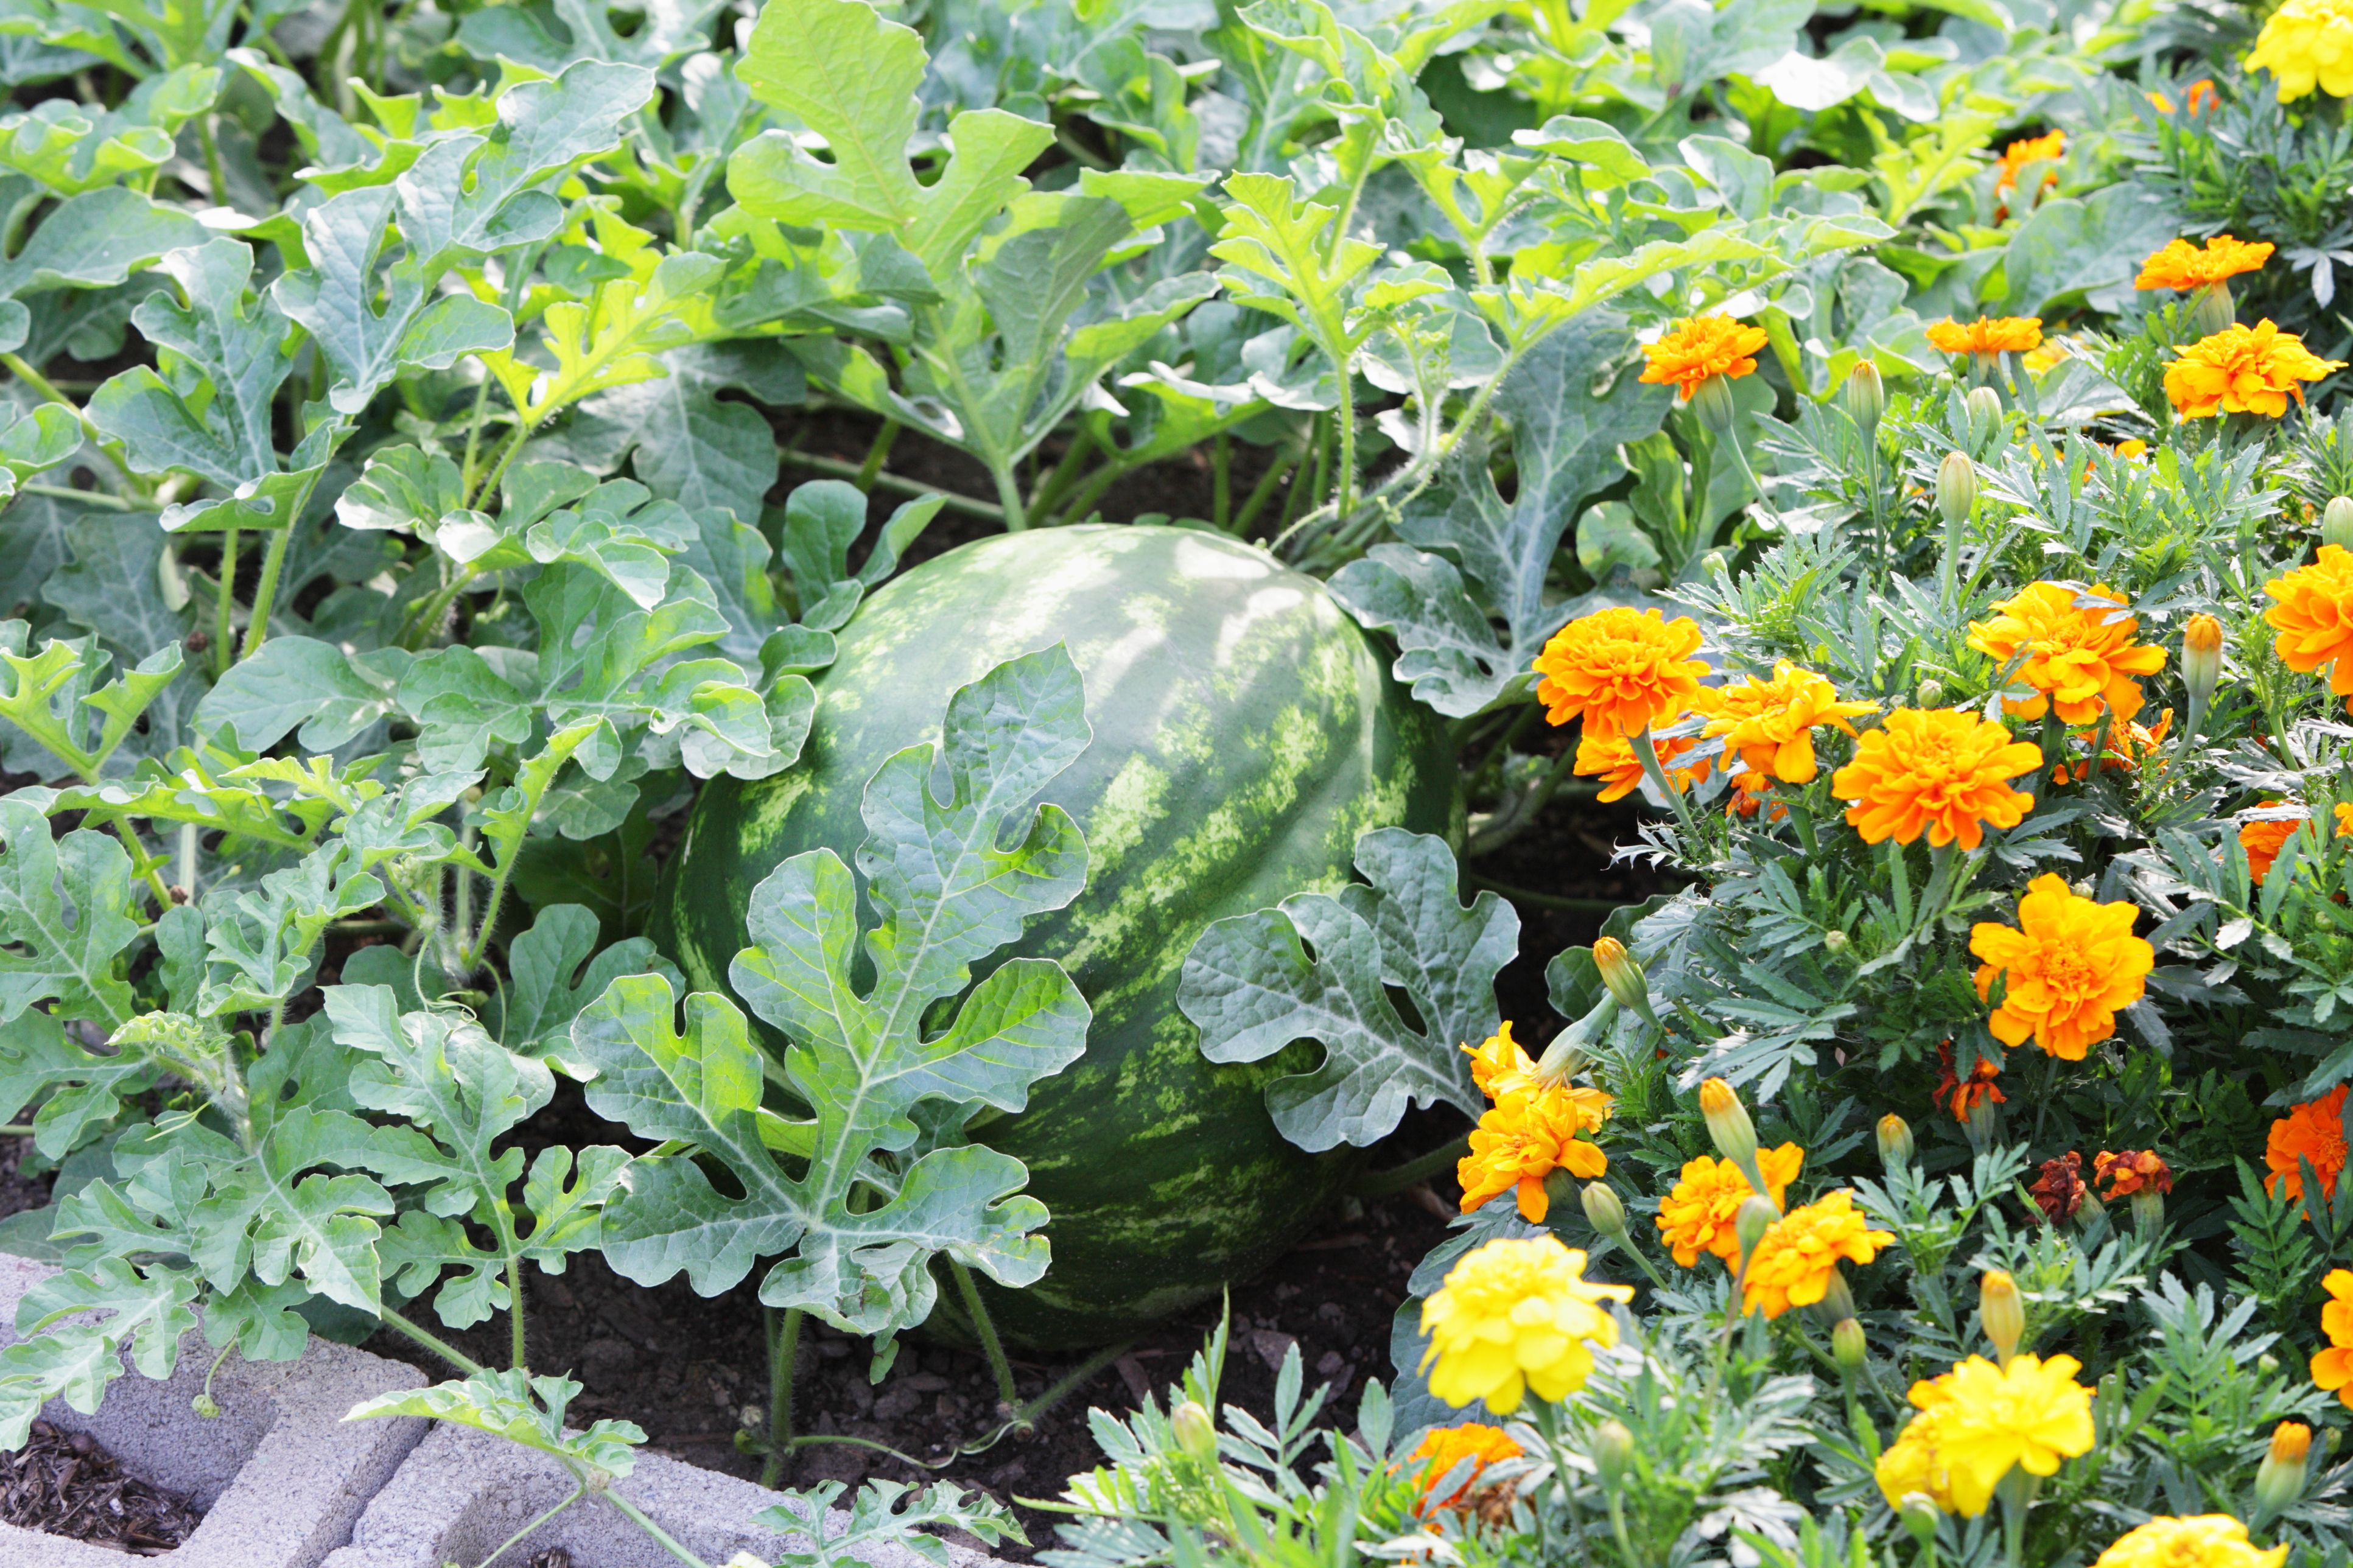 Image of Marigolds companion plant for lettuce